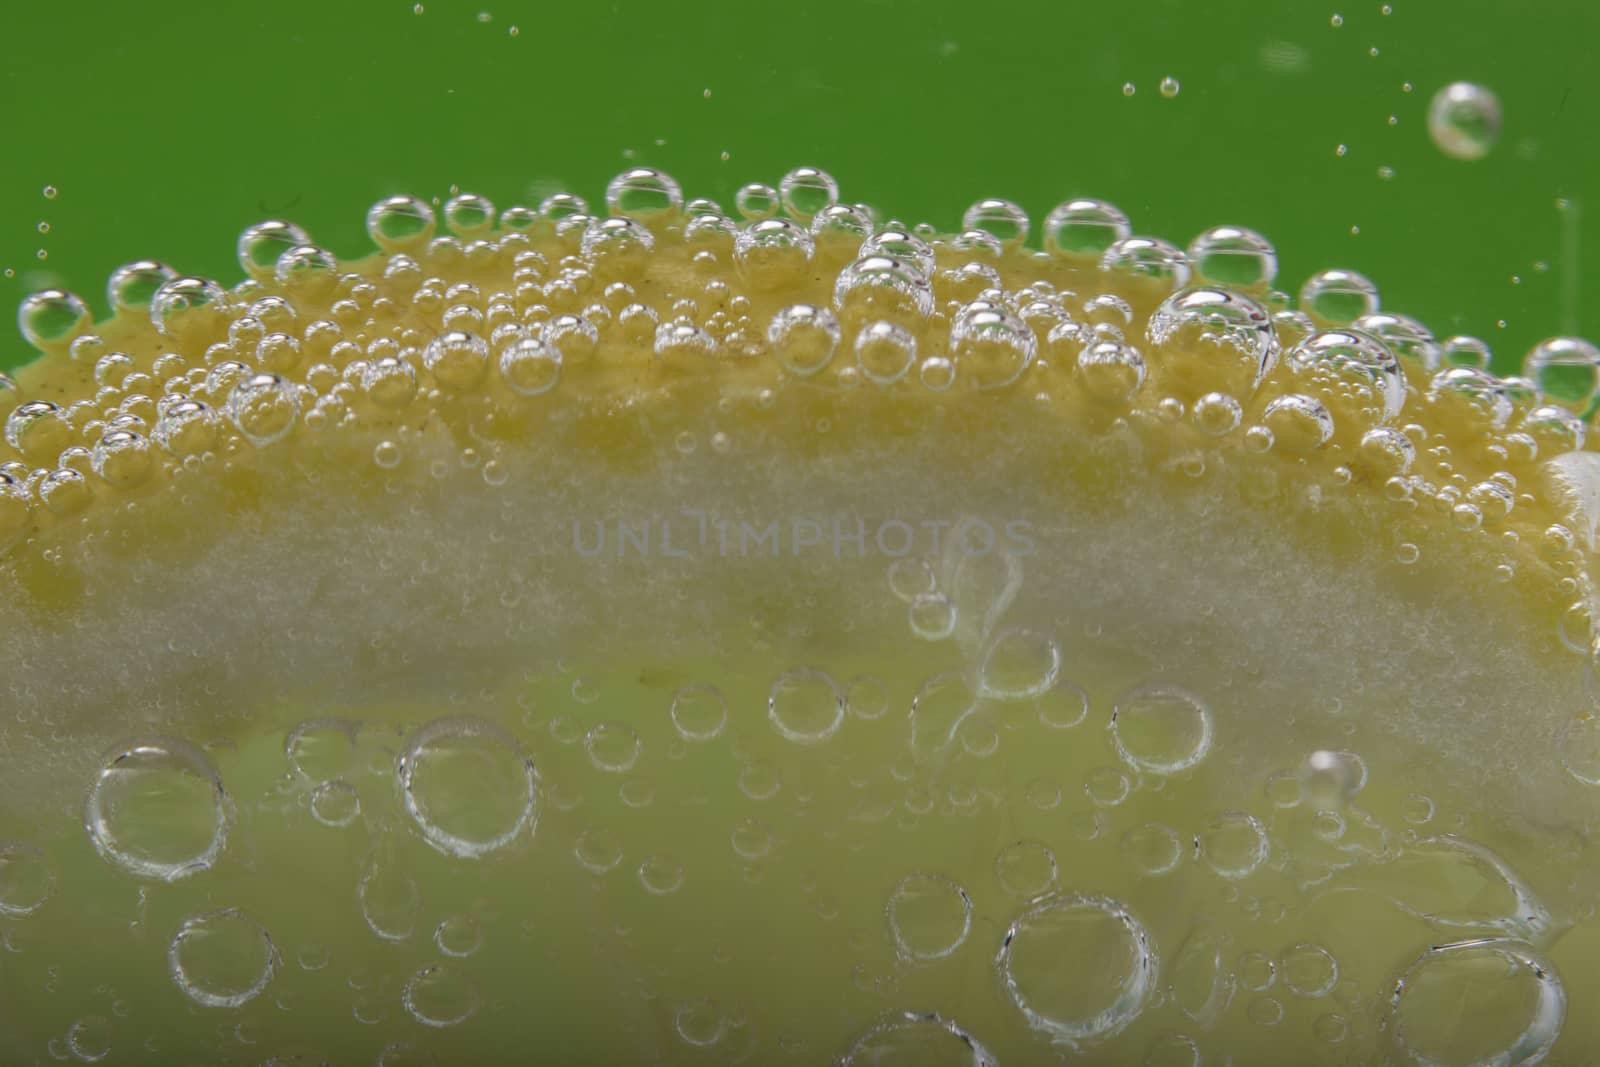 Slice Of Lemon In Mineral Water On Green Background by gstalker